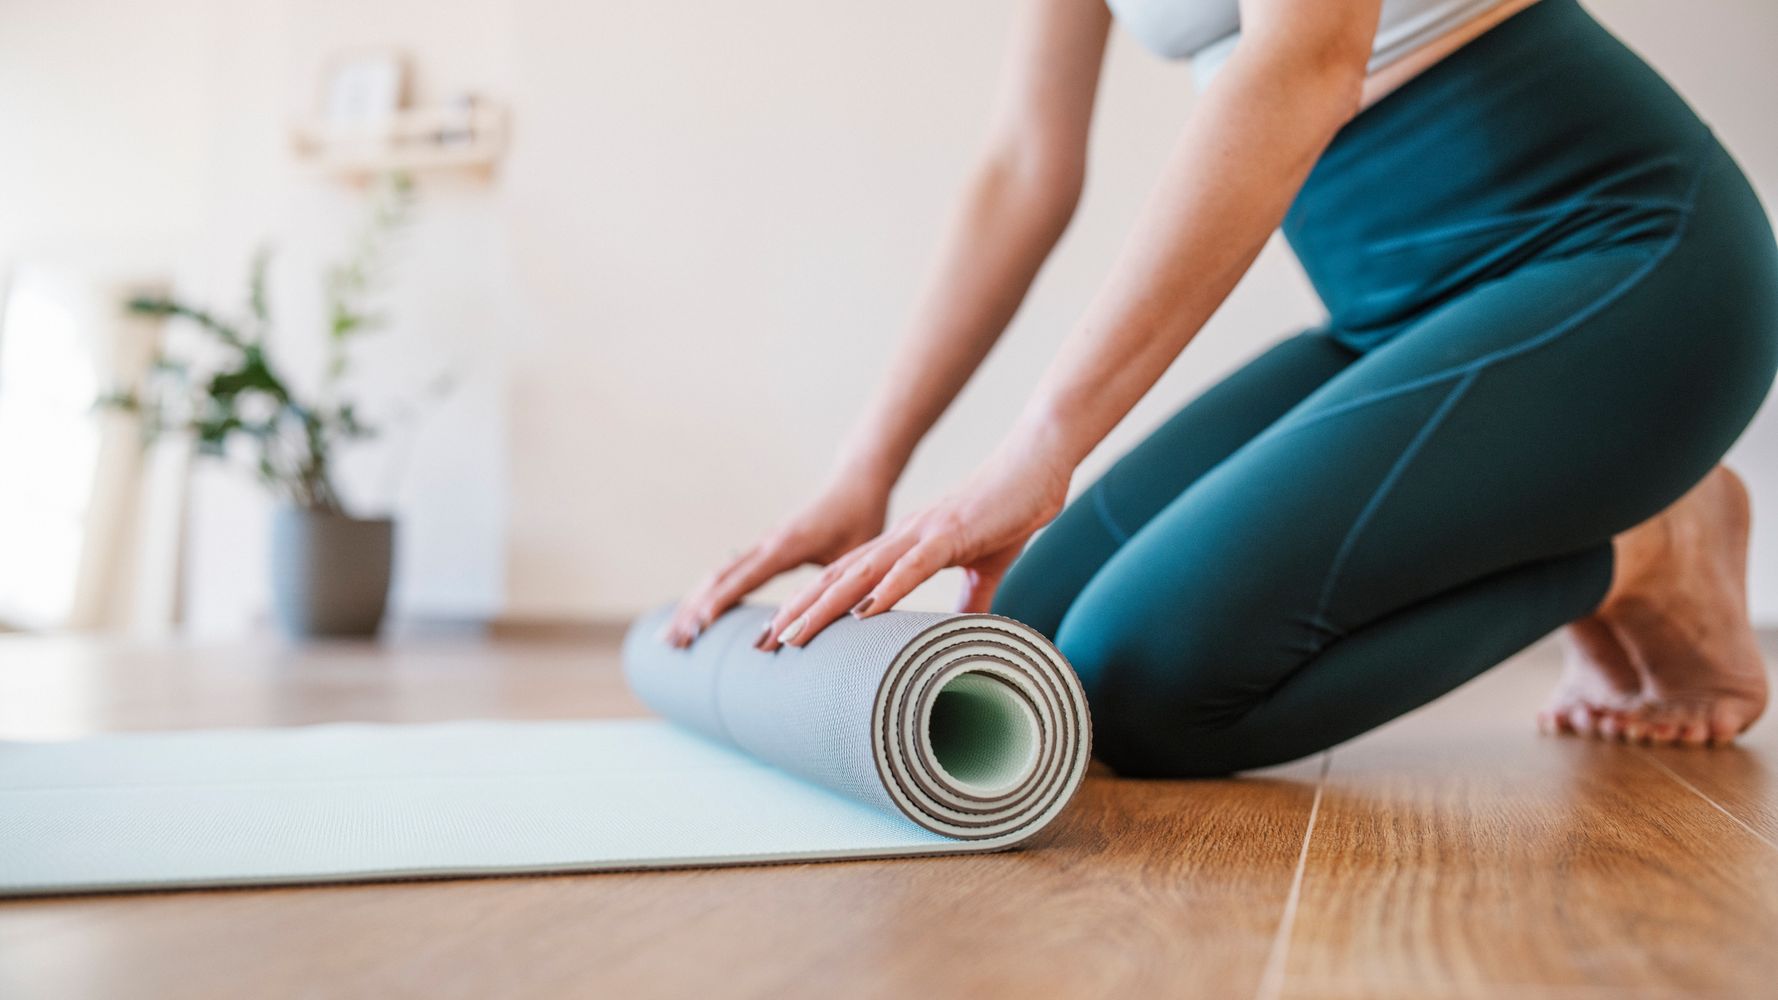 JadeYoga Travel Yoga Mat - Packable, Lightweight, and Portable Yoga Mat -  Non-Slip Natural Rubber Mat for Women & Men - Great for Yoga, Home, Gym